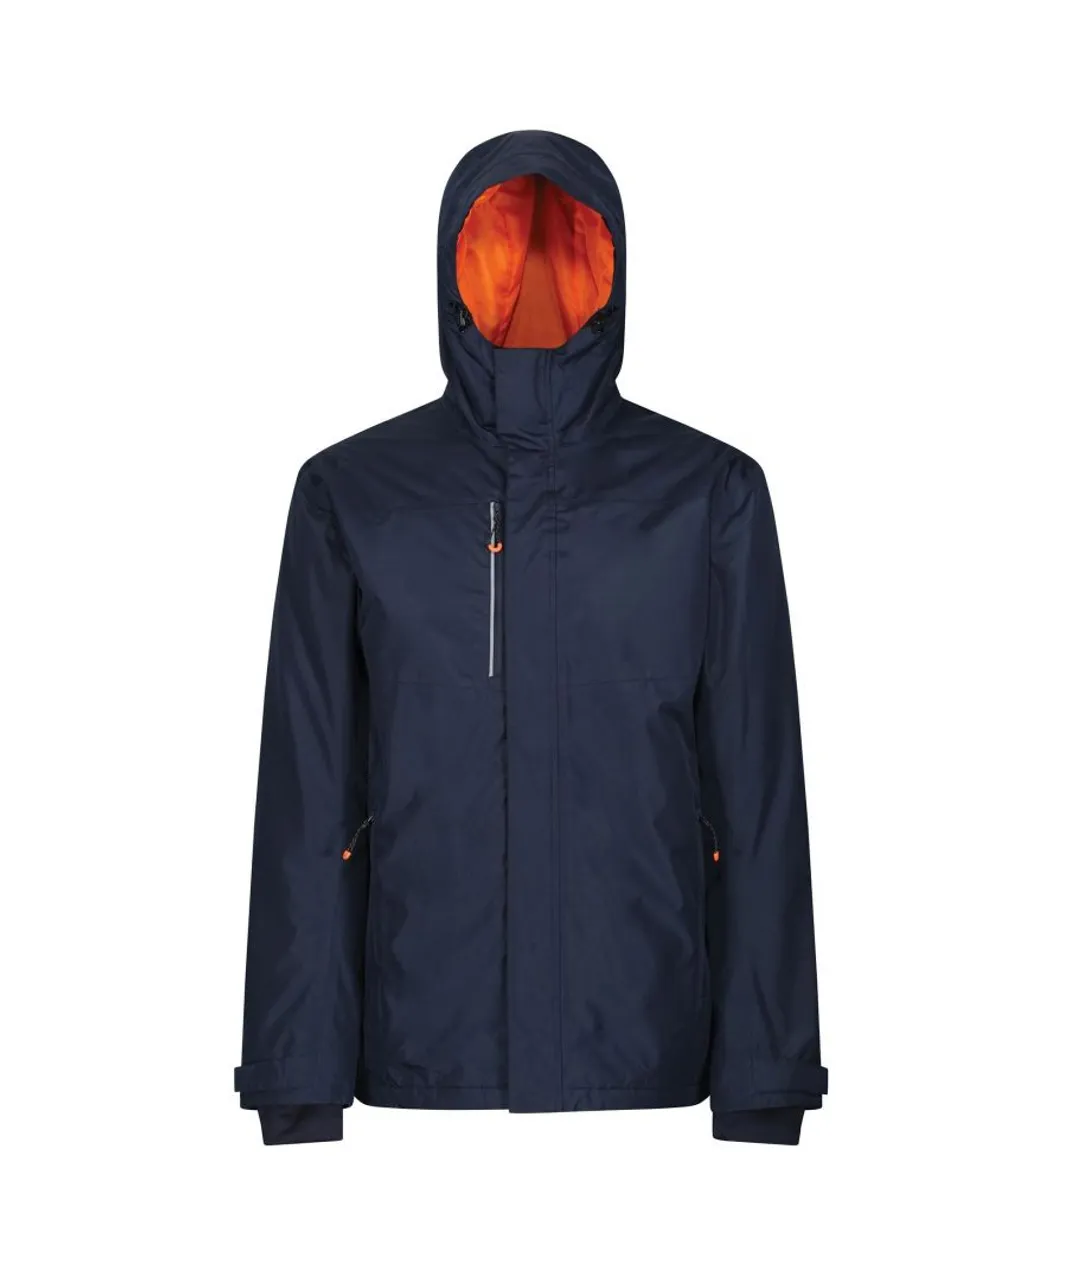 Regatta Mens Thermogen Heated Waterproof Jacket (Navy/Magma Orange) - Multicolour